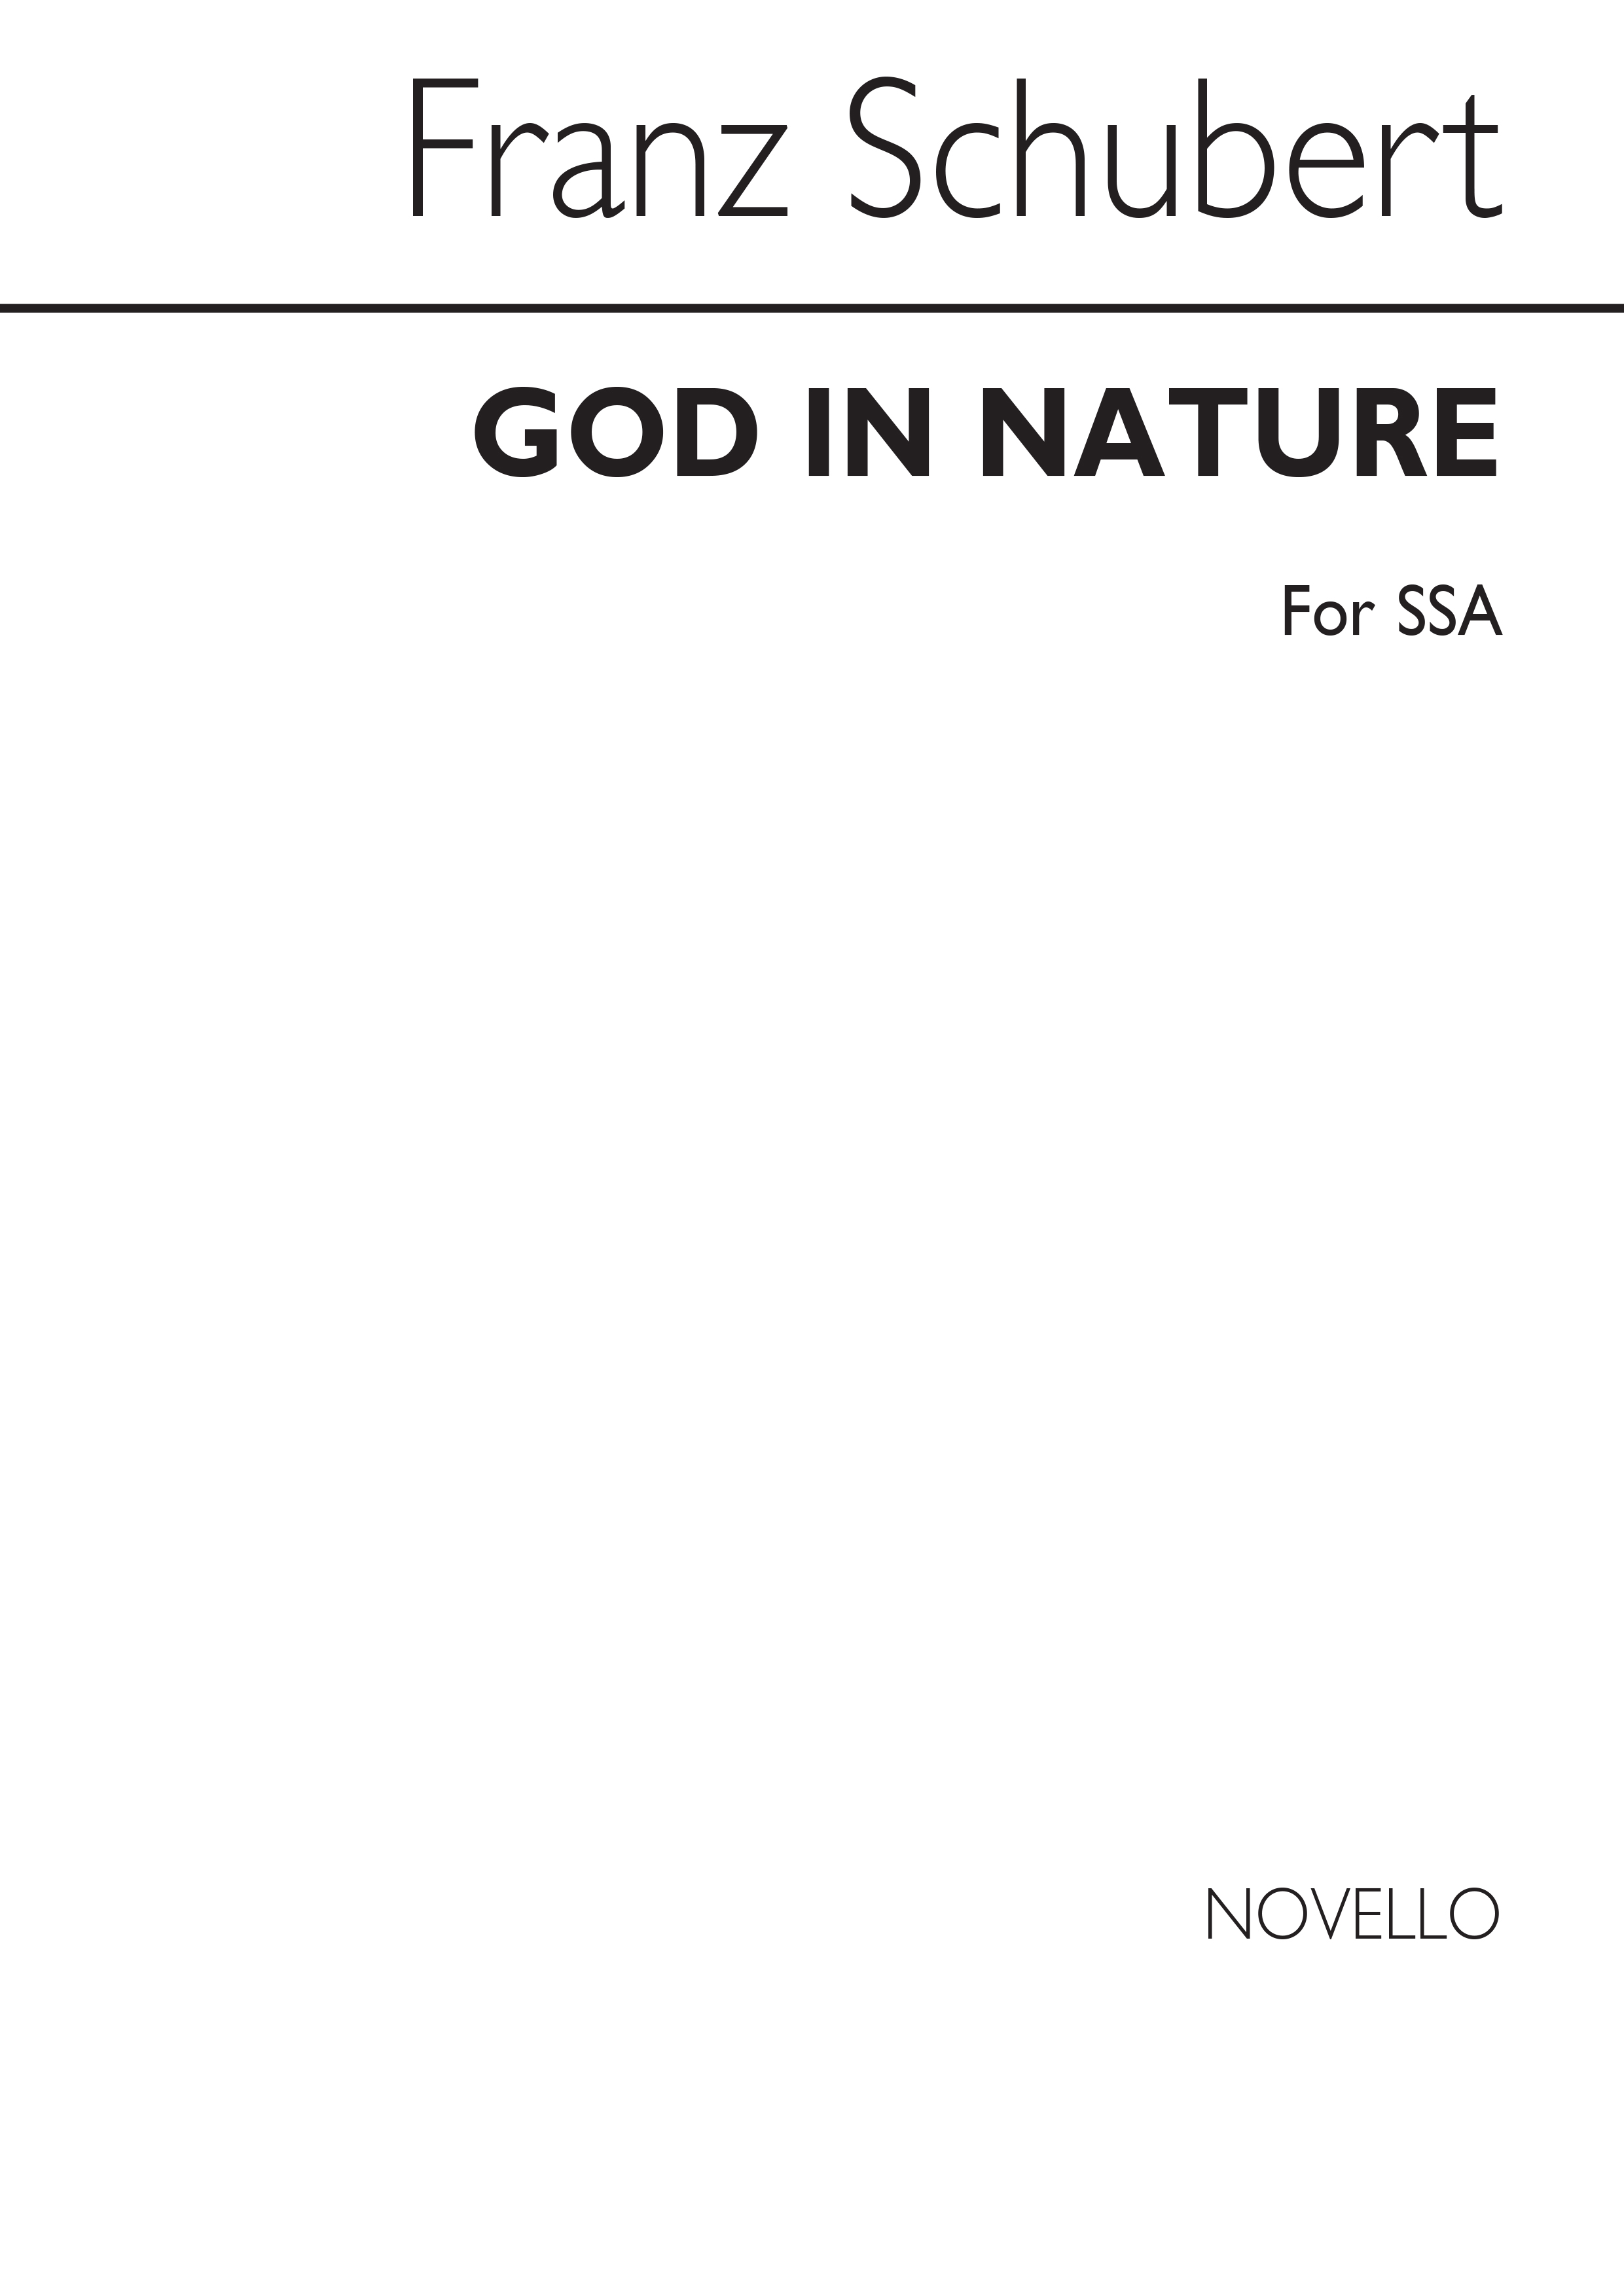 Schubert God In Nature Ssa